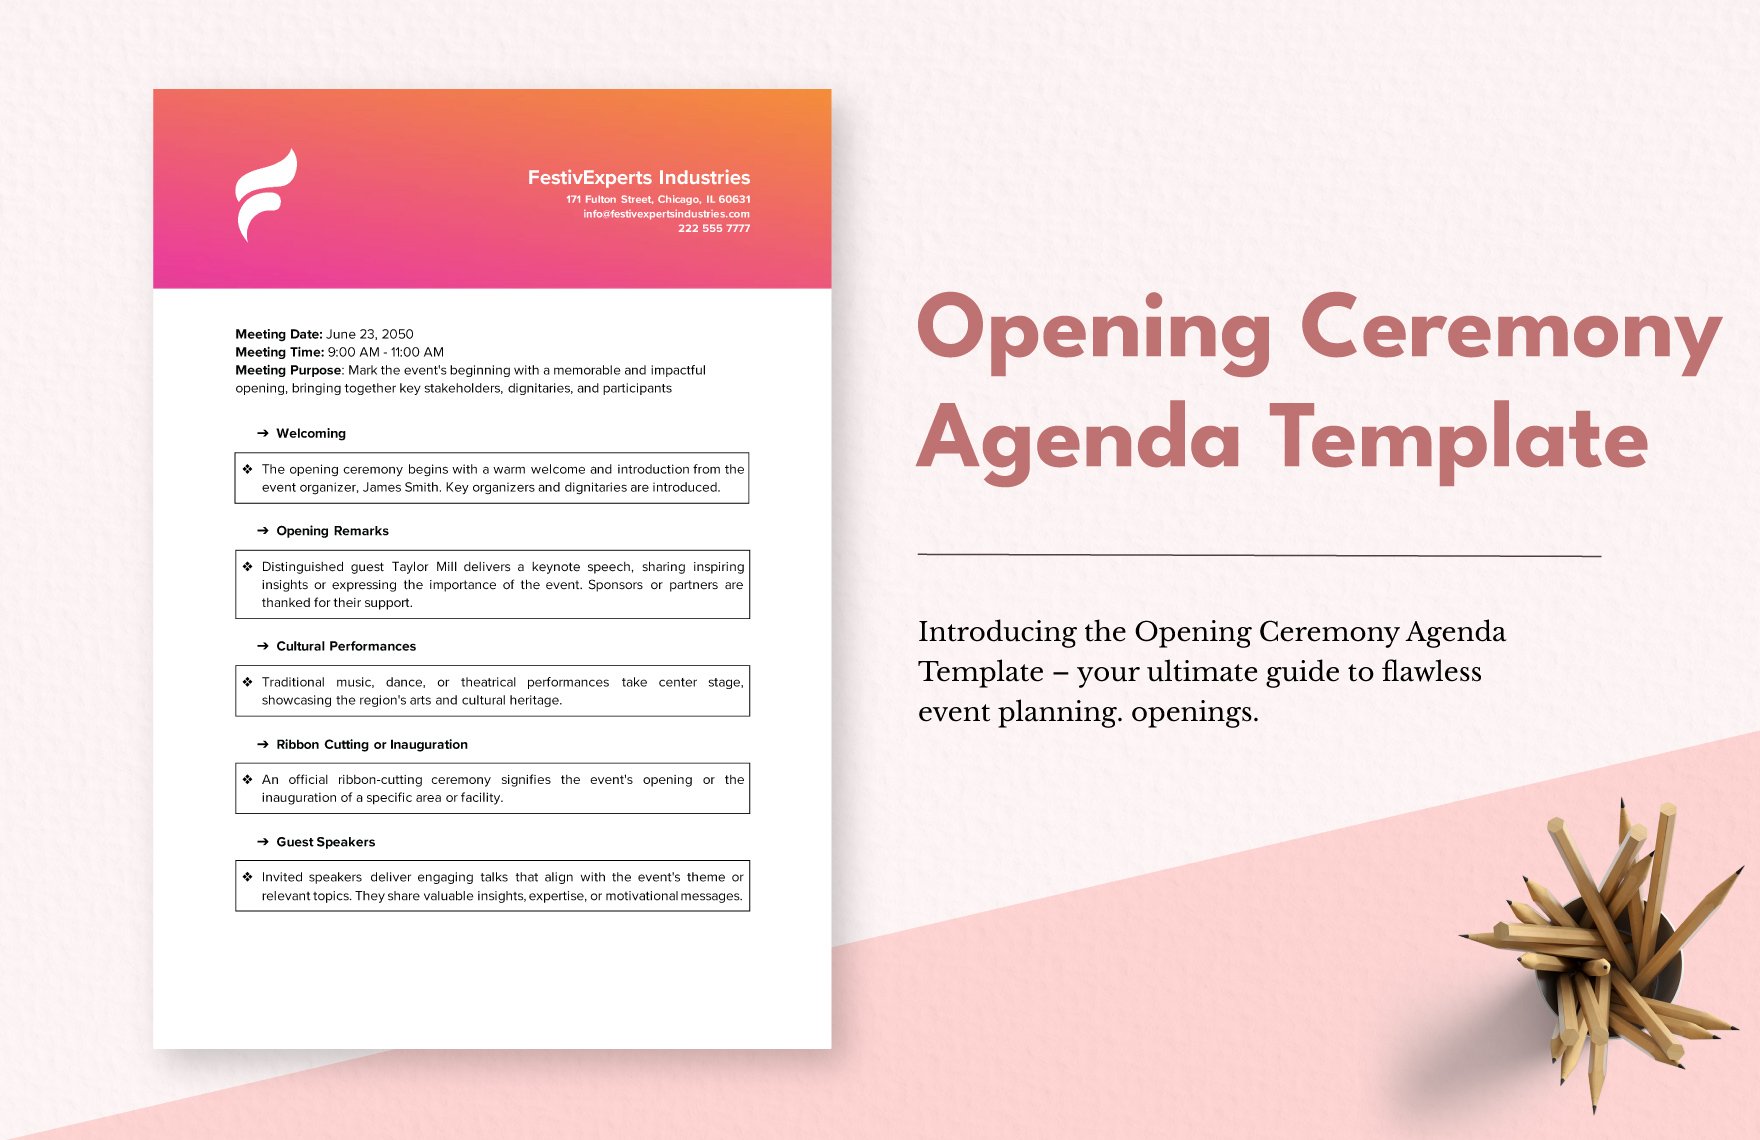 Opening Ceremony Agenda Template